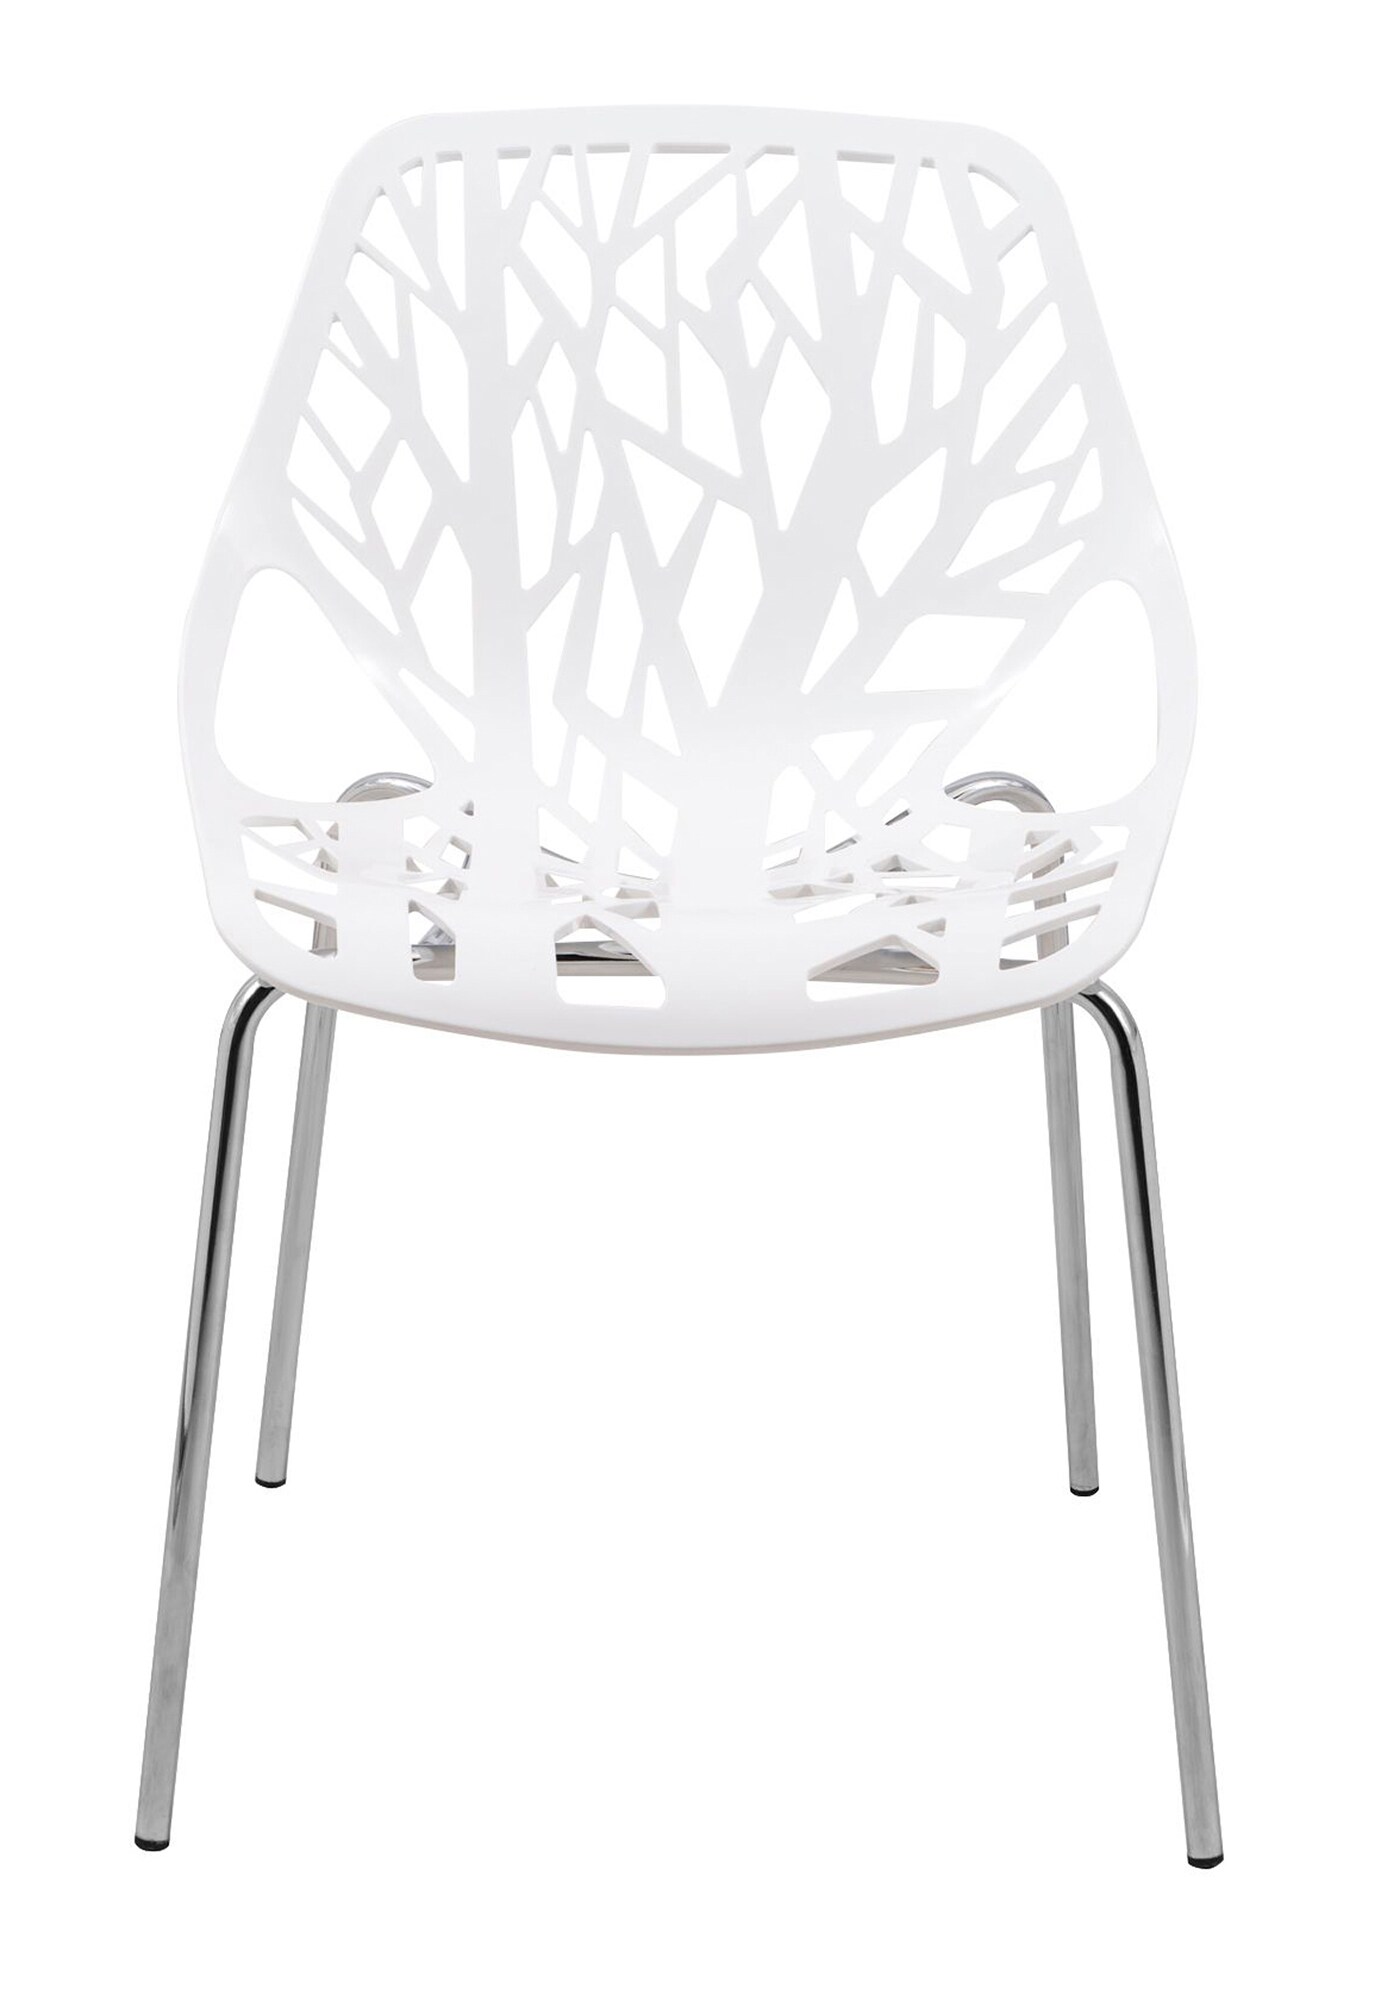 LeisureMod Modern Asbury Dining Chair with Chromed Legs